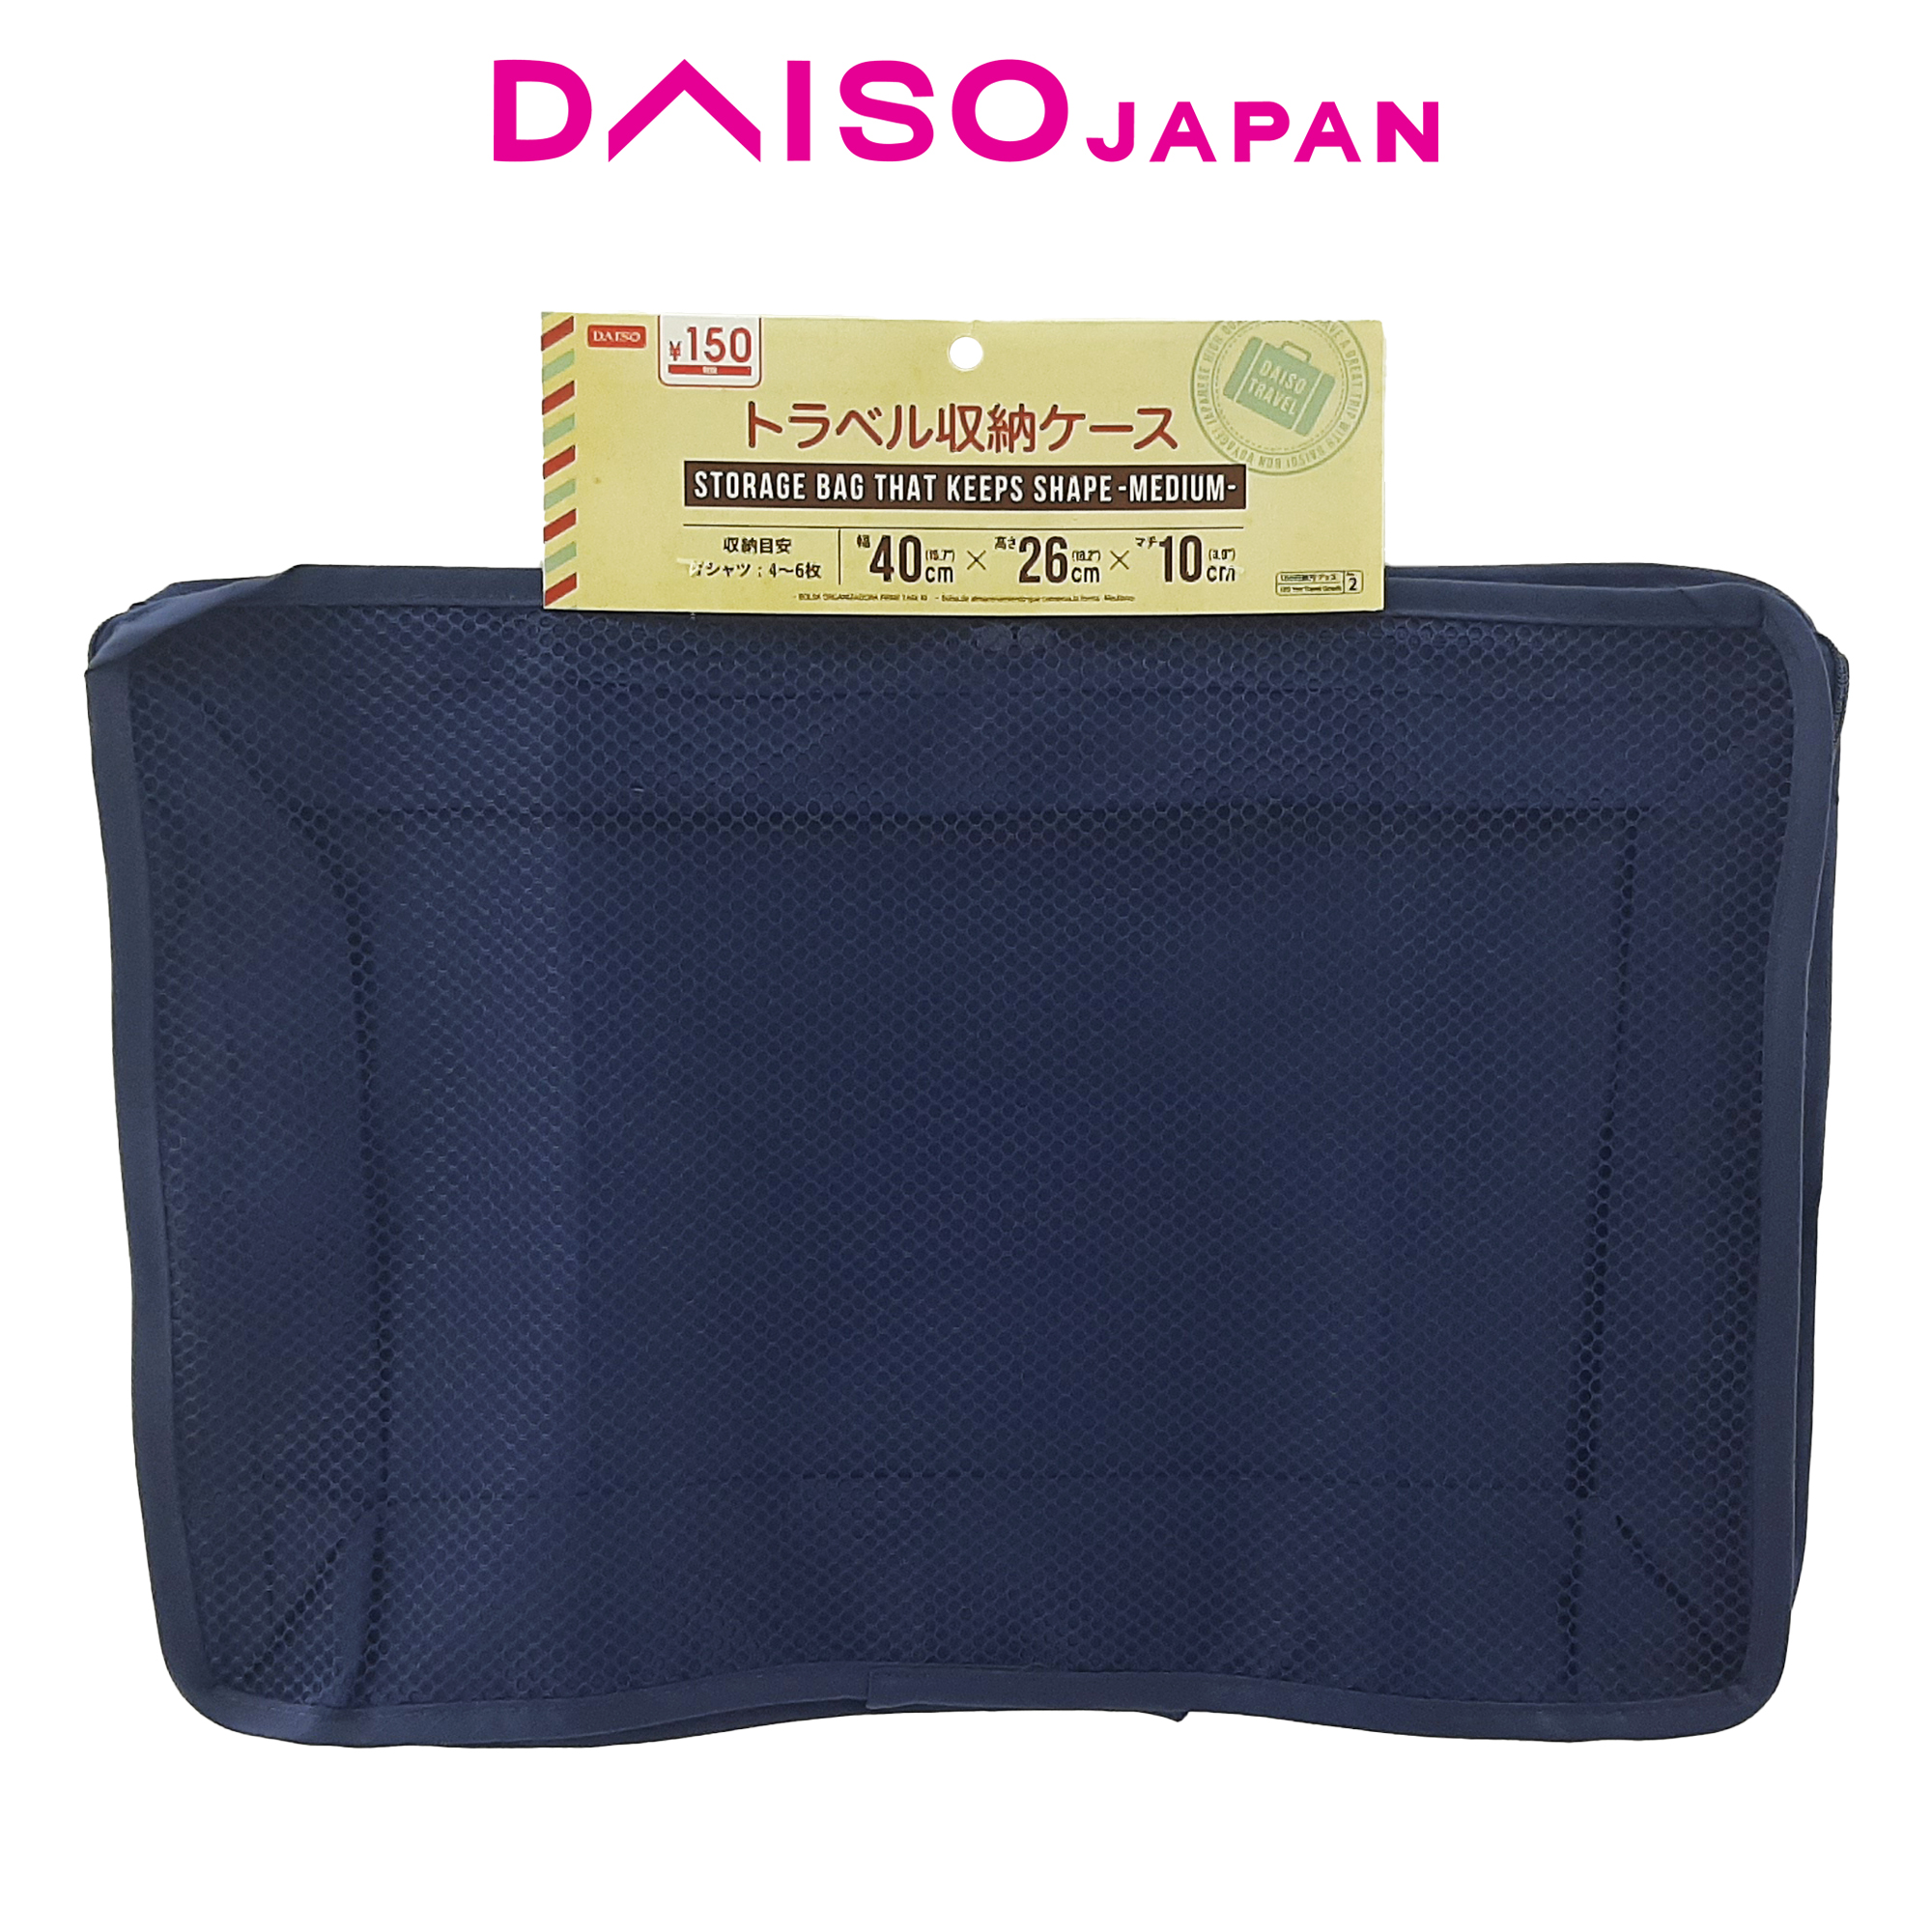 Eco bag shopping bag / Eco Bag Wigh Band Mint| Daiso Canada co., ltd.